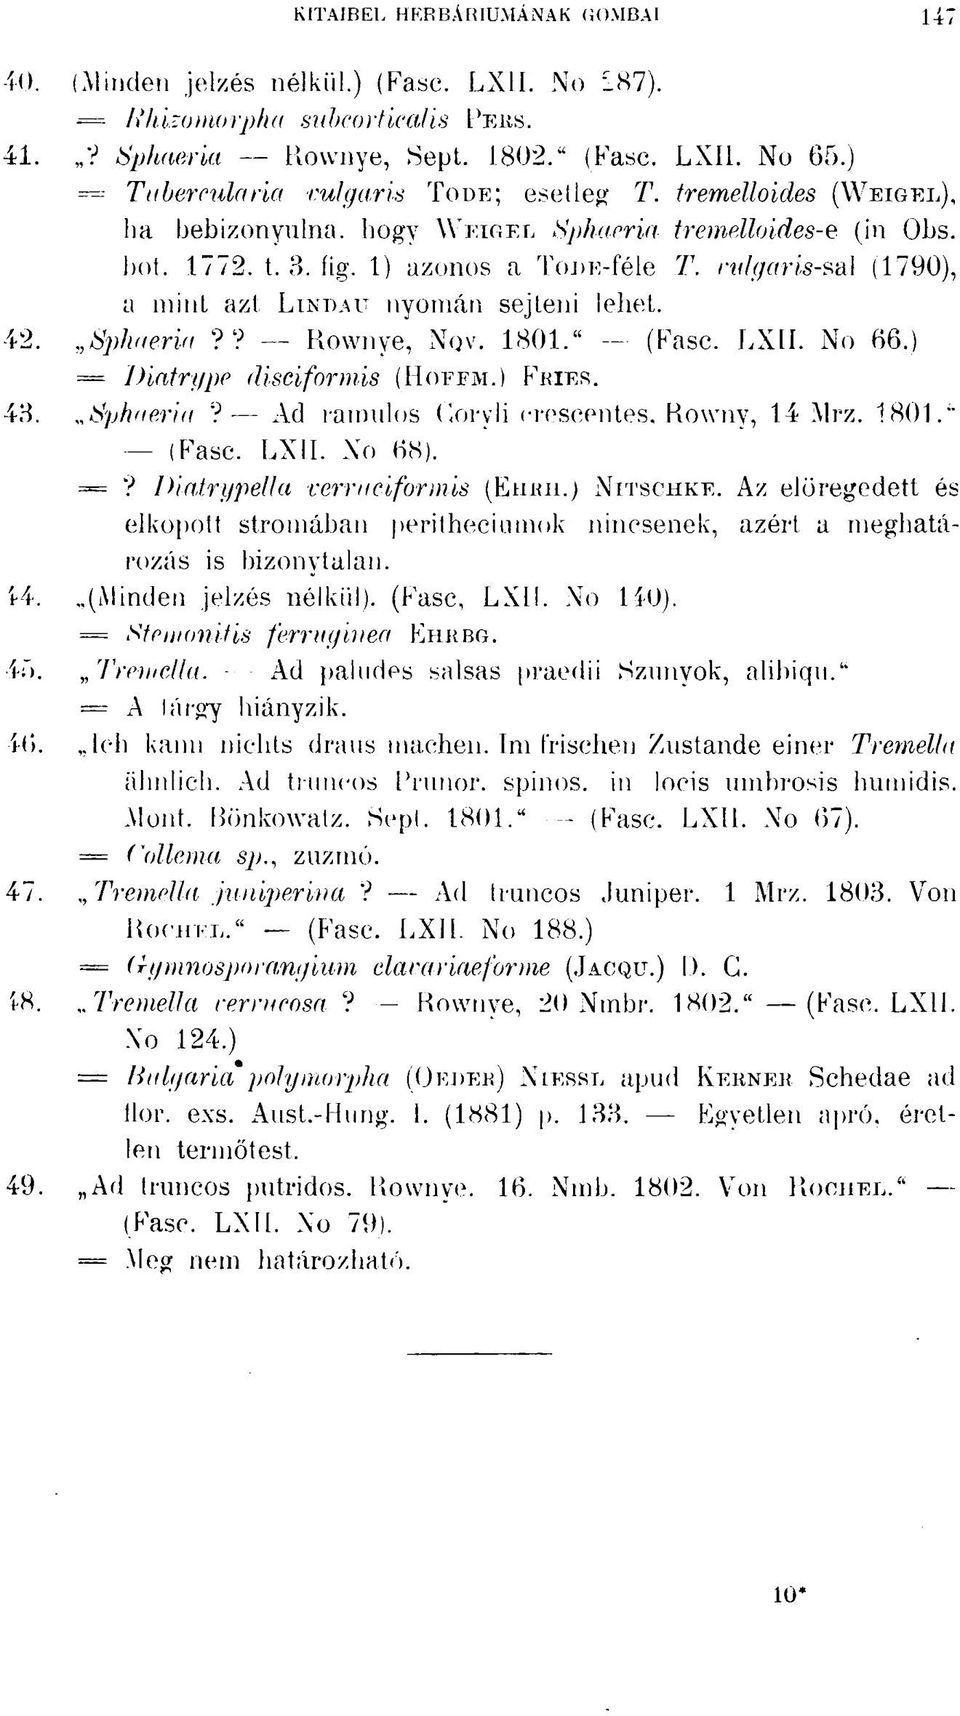 vidgaris-sal (1790), a mint azt LINDAU nyomán sejteni lehet. 42. Sphaeria?? Rownye, Nov. 1801." (Fase. LXII. No 66.) = Diatrype disciformis (HOFFM.) FRIES. 43. Sphaeria? Ad ramulos Gbryli crescentes, Rowny, 14 Mrz.